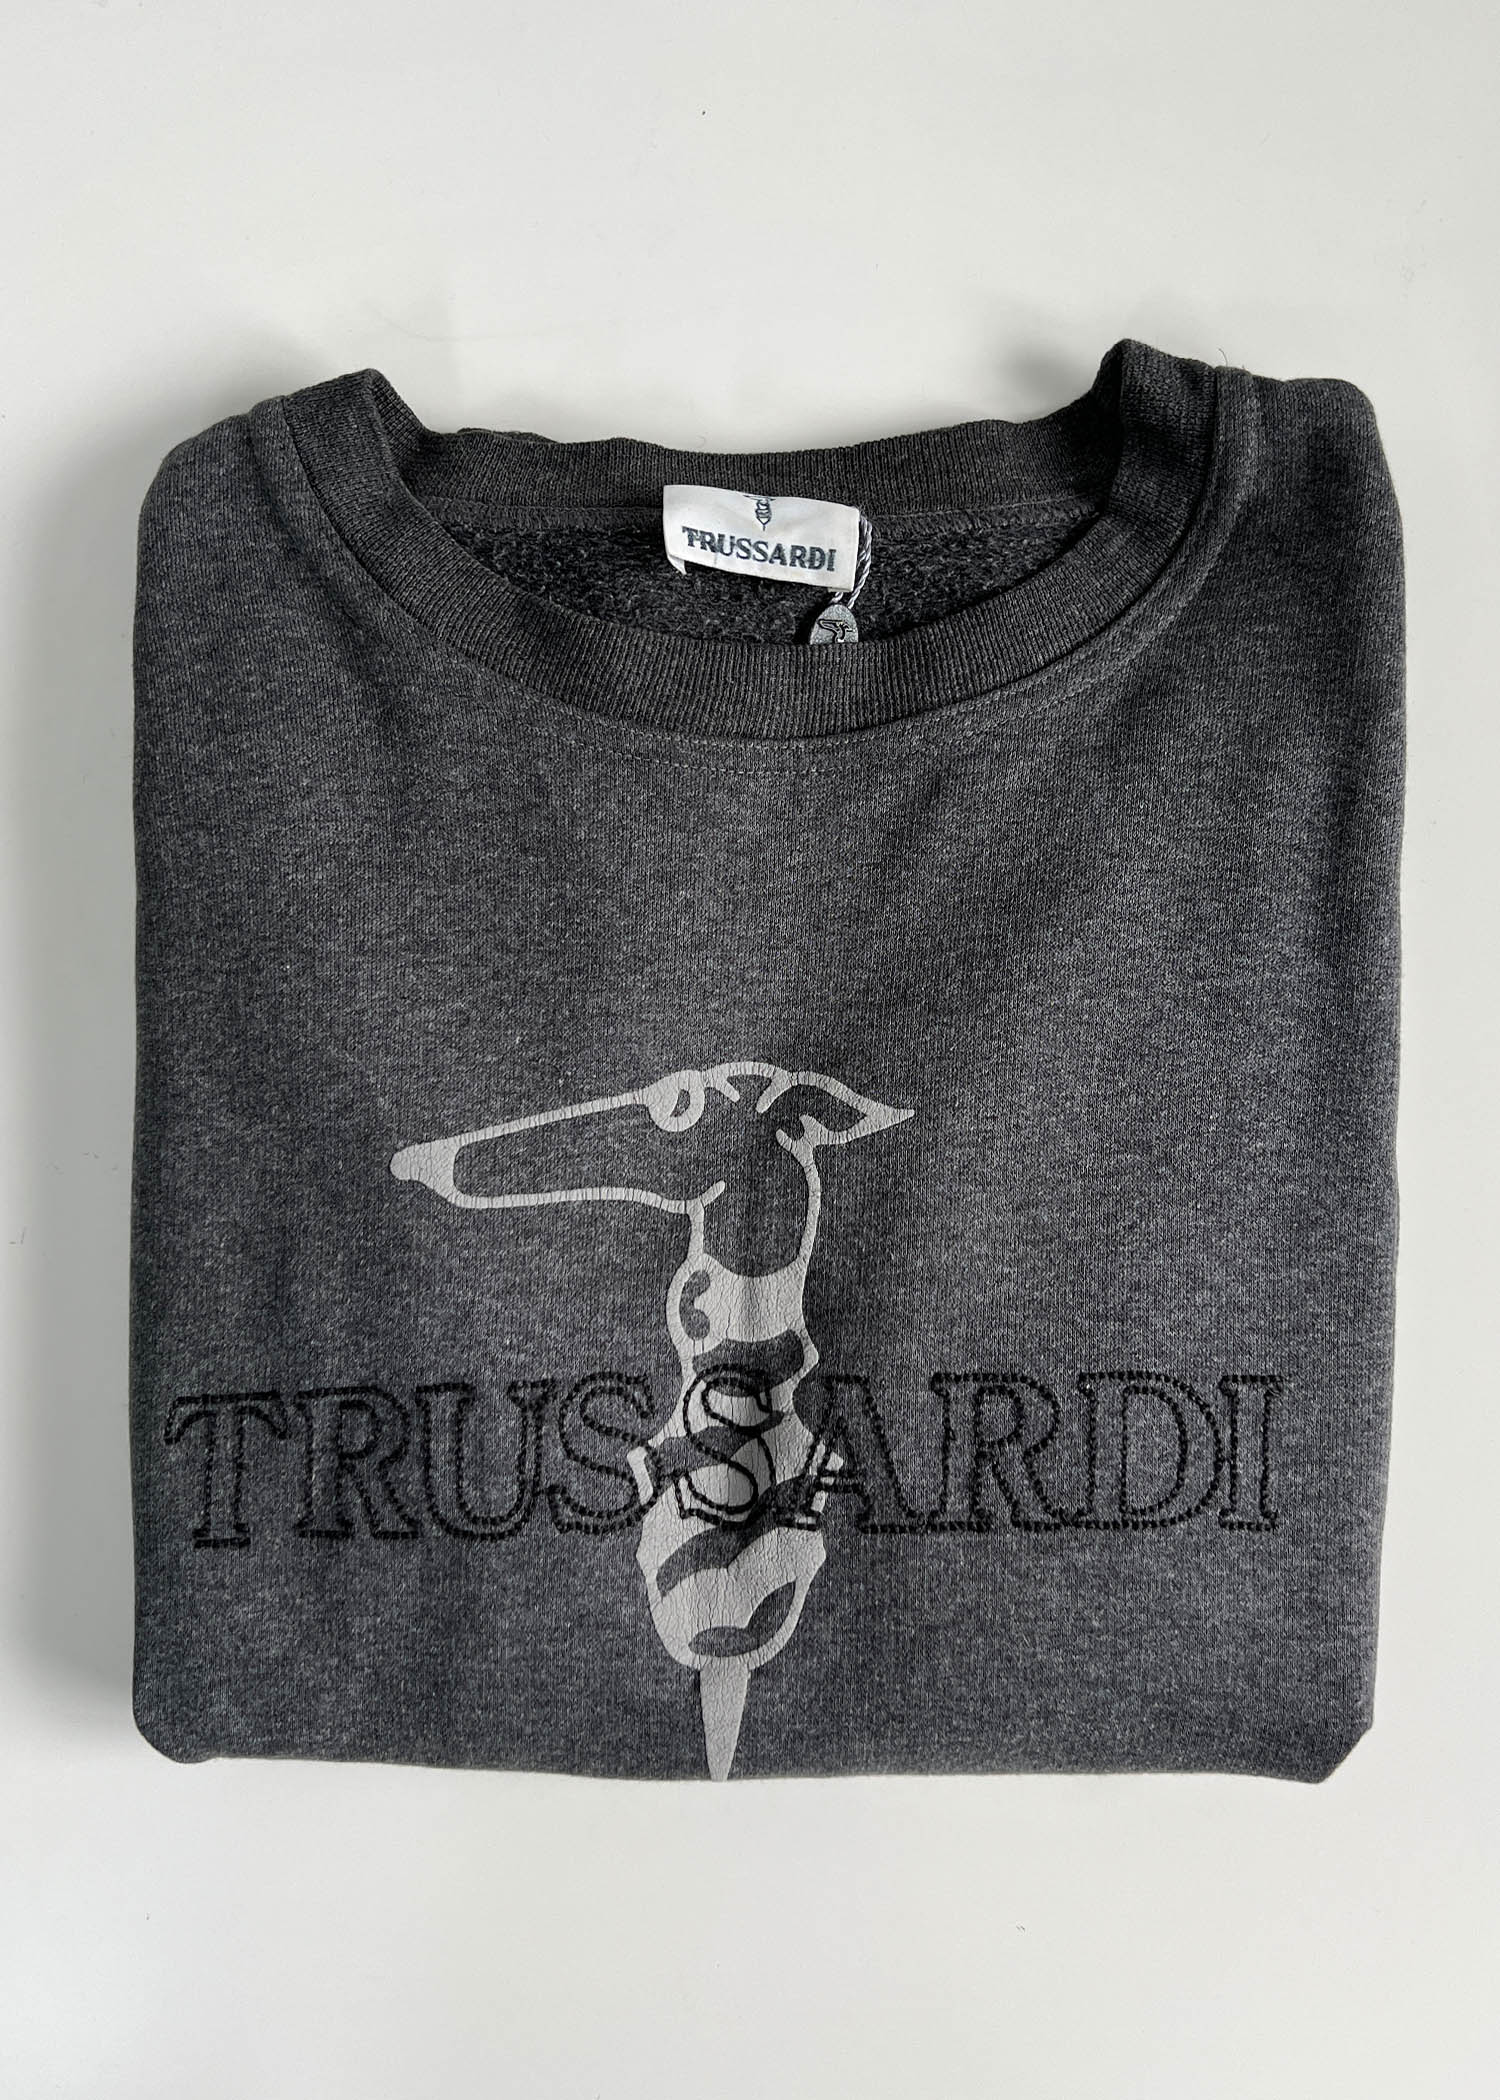 TRUSSARDI sweatshirts